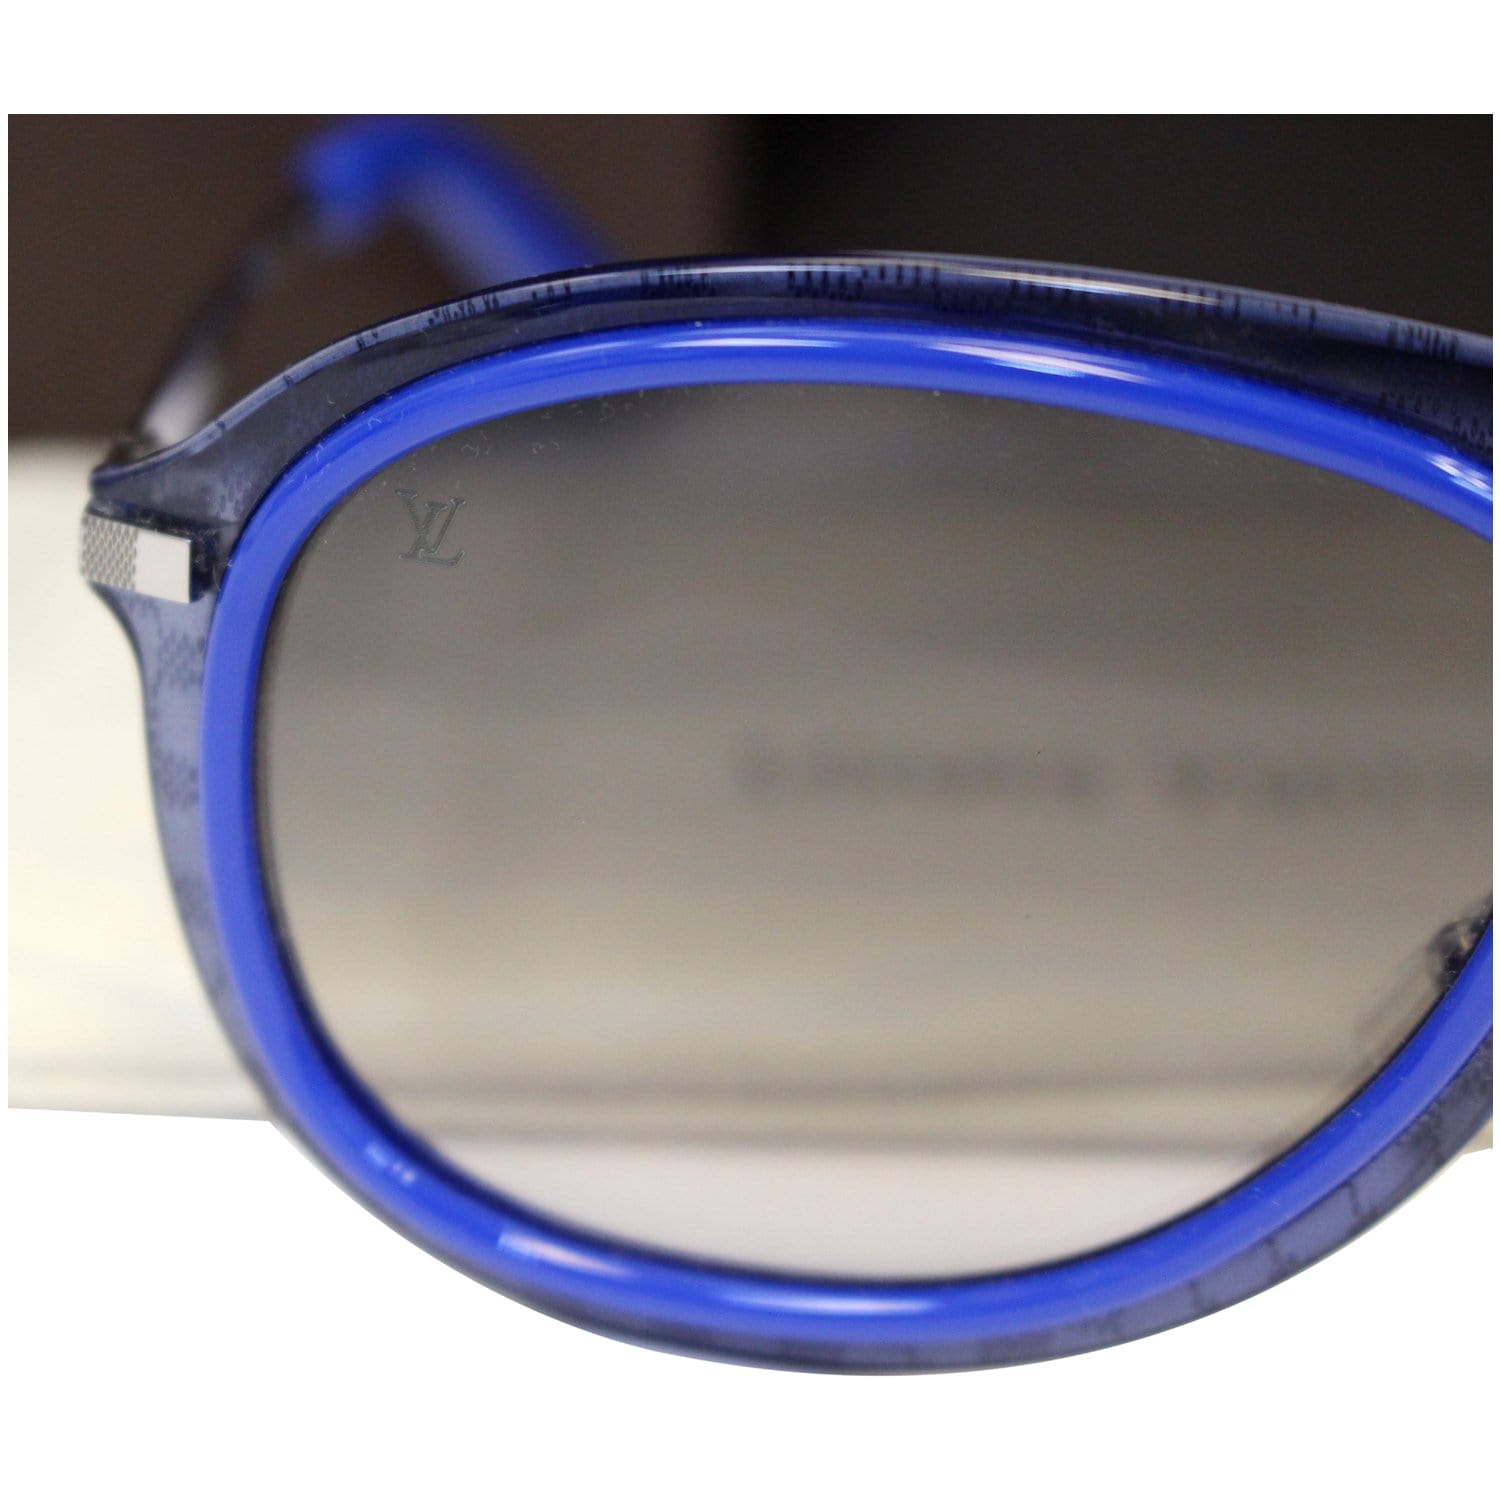 Louis Vuitton 100% UV Sunglasses for Women